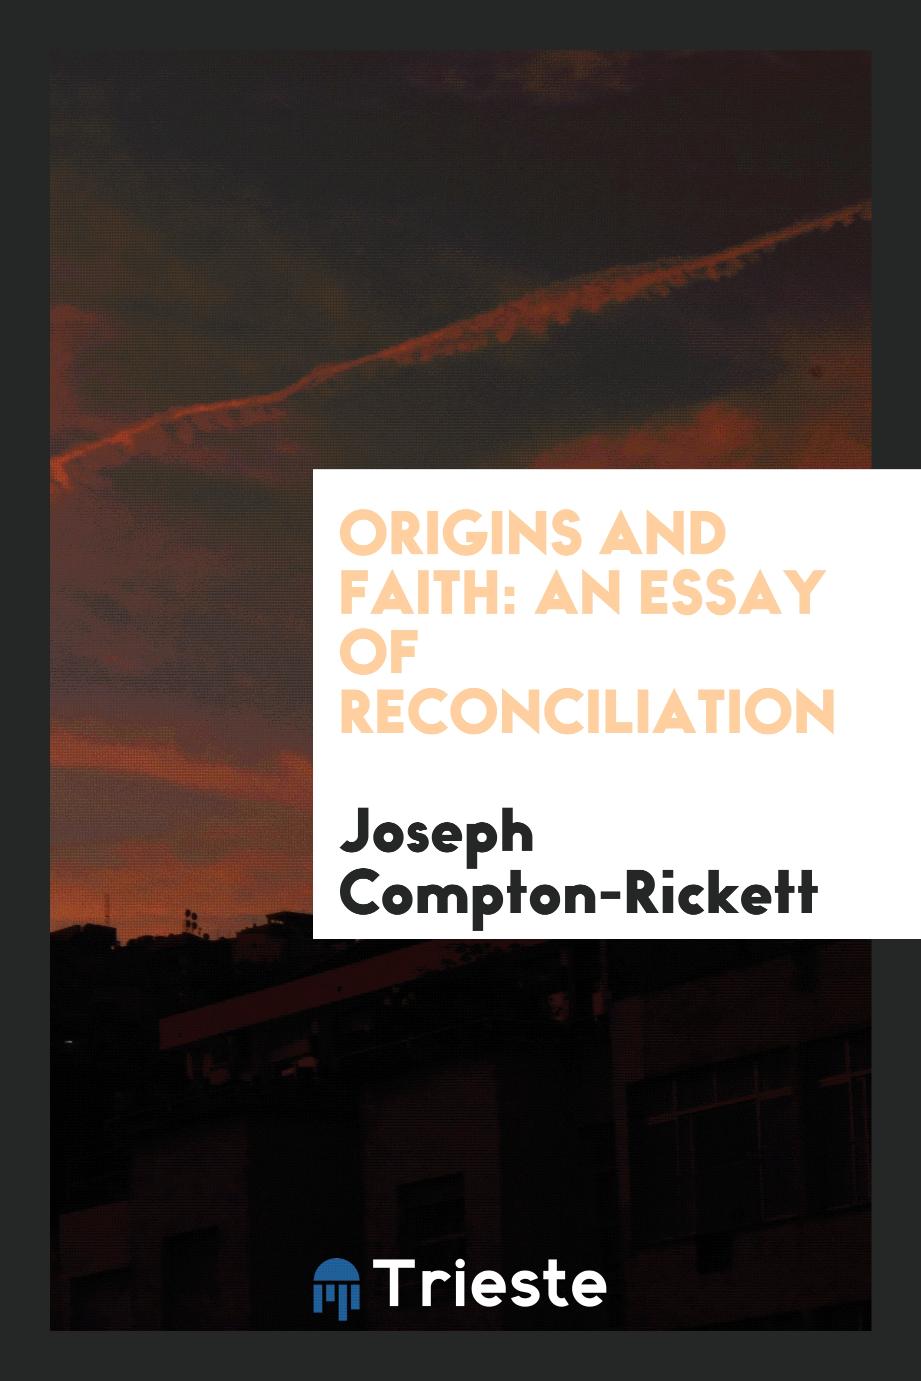 Origins and Faith: An Essay of Reconciliation